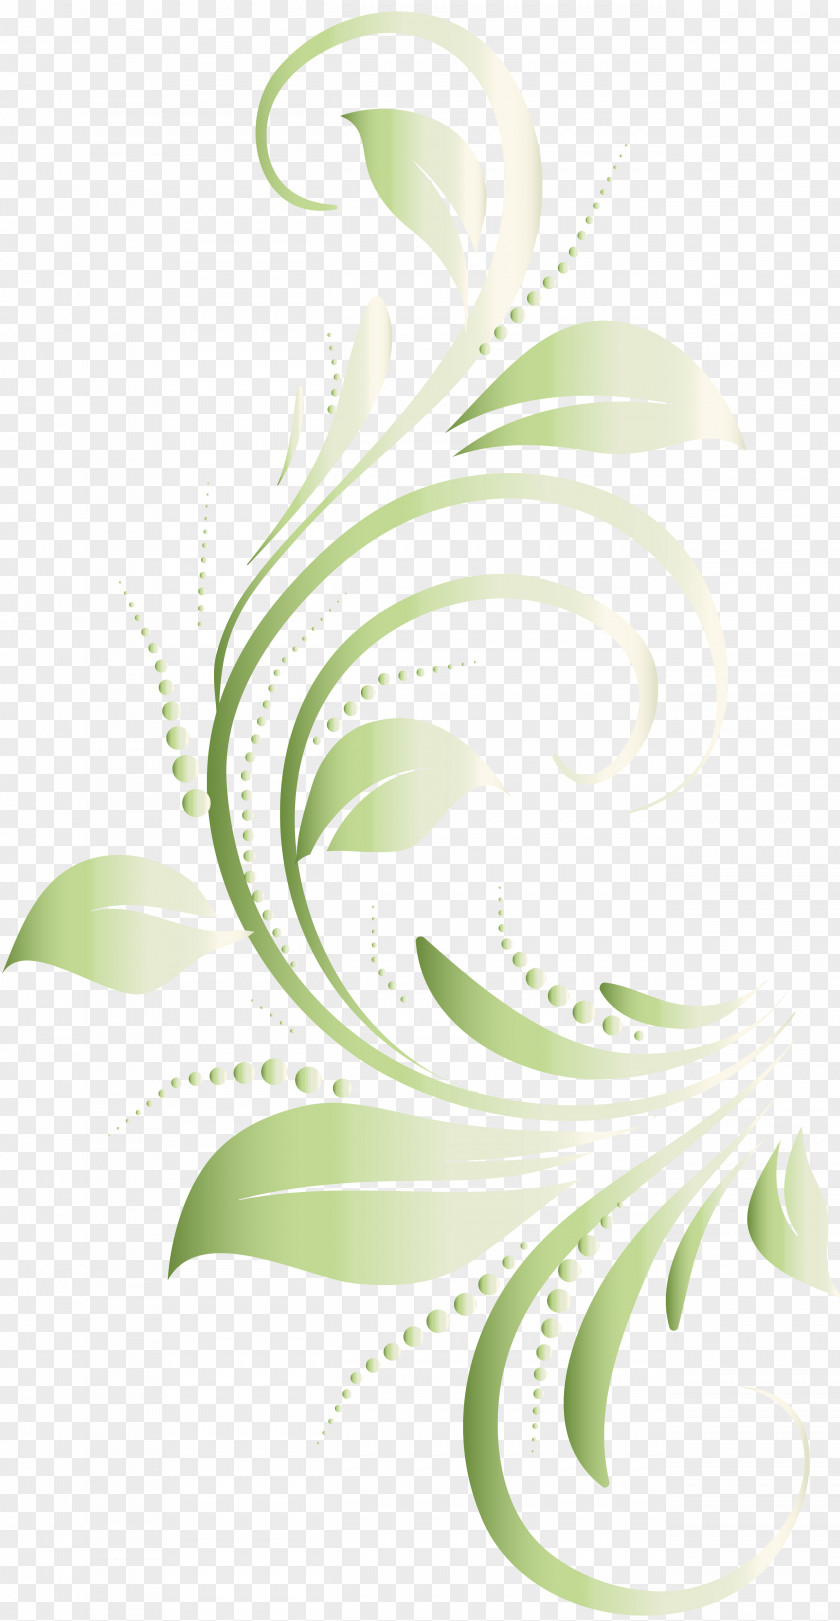 Green Floral Design Flower Graphic PNG